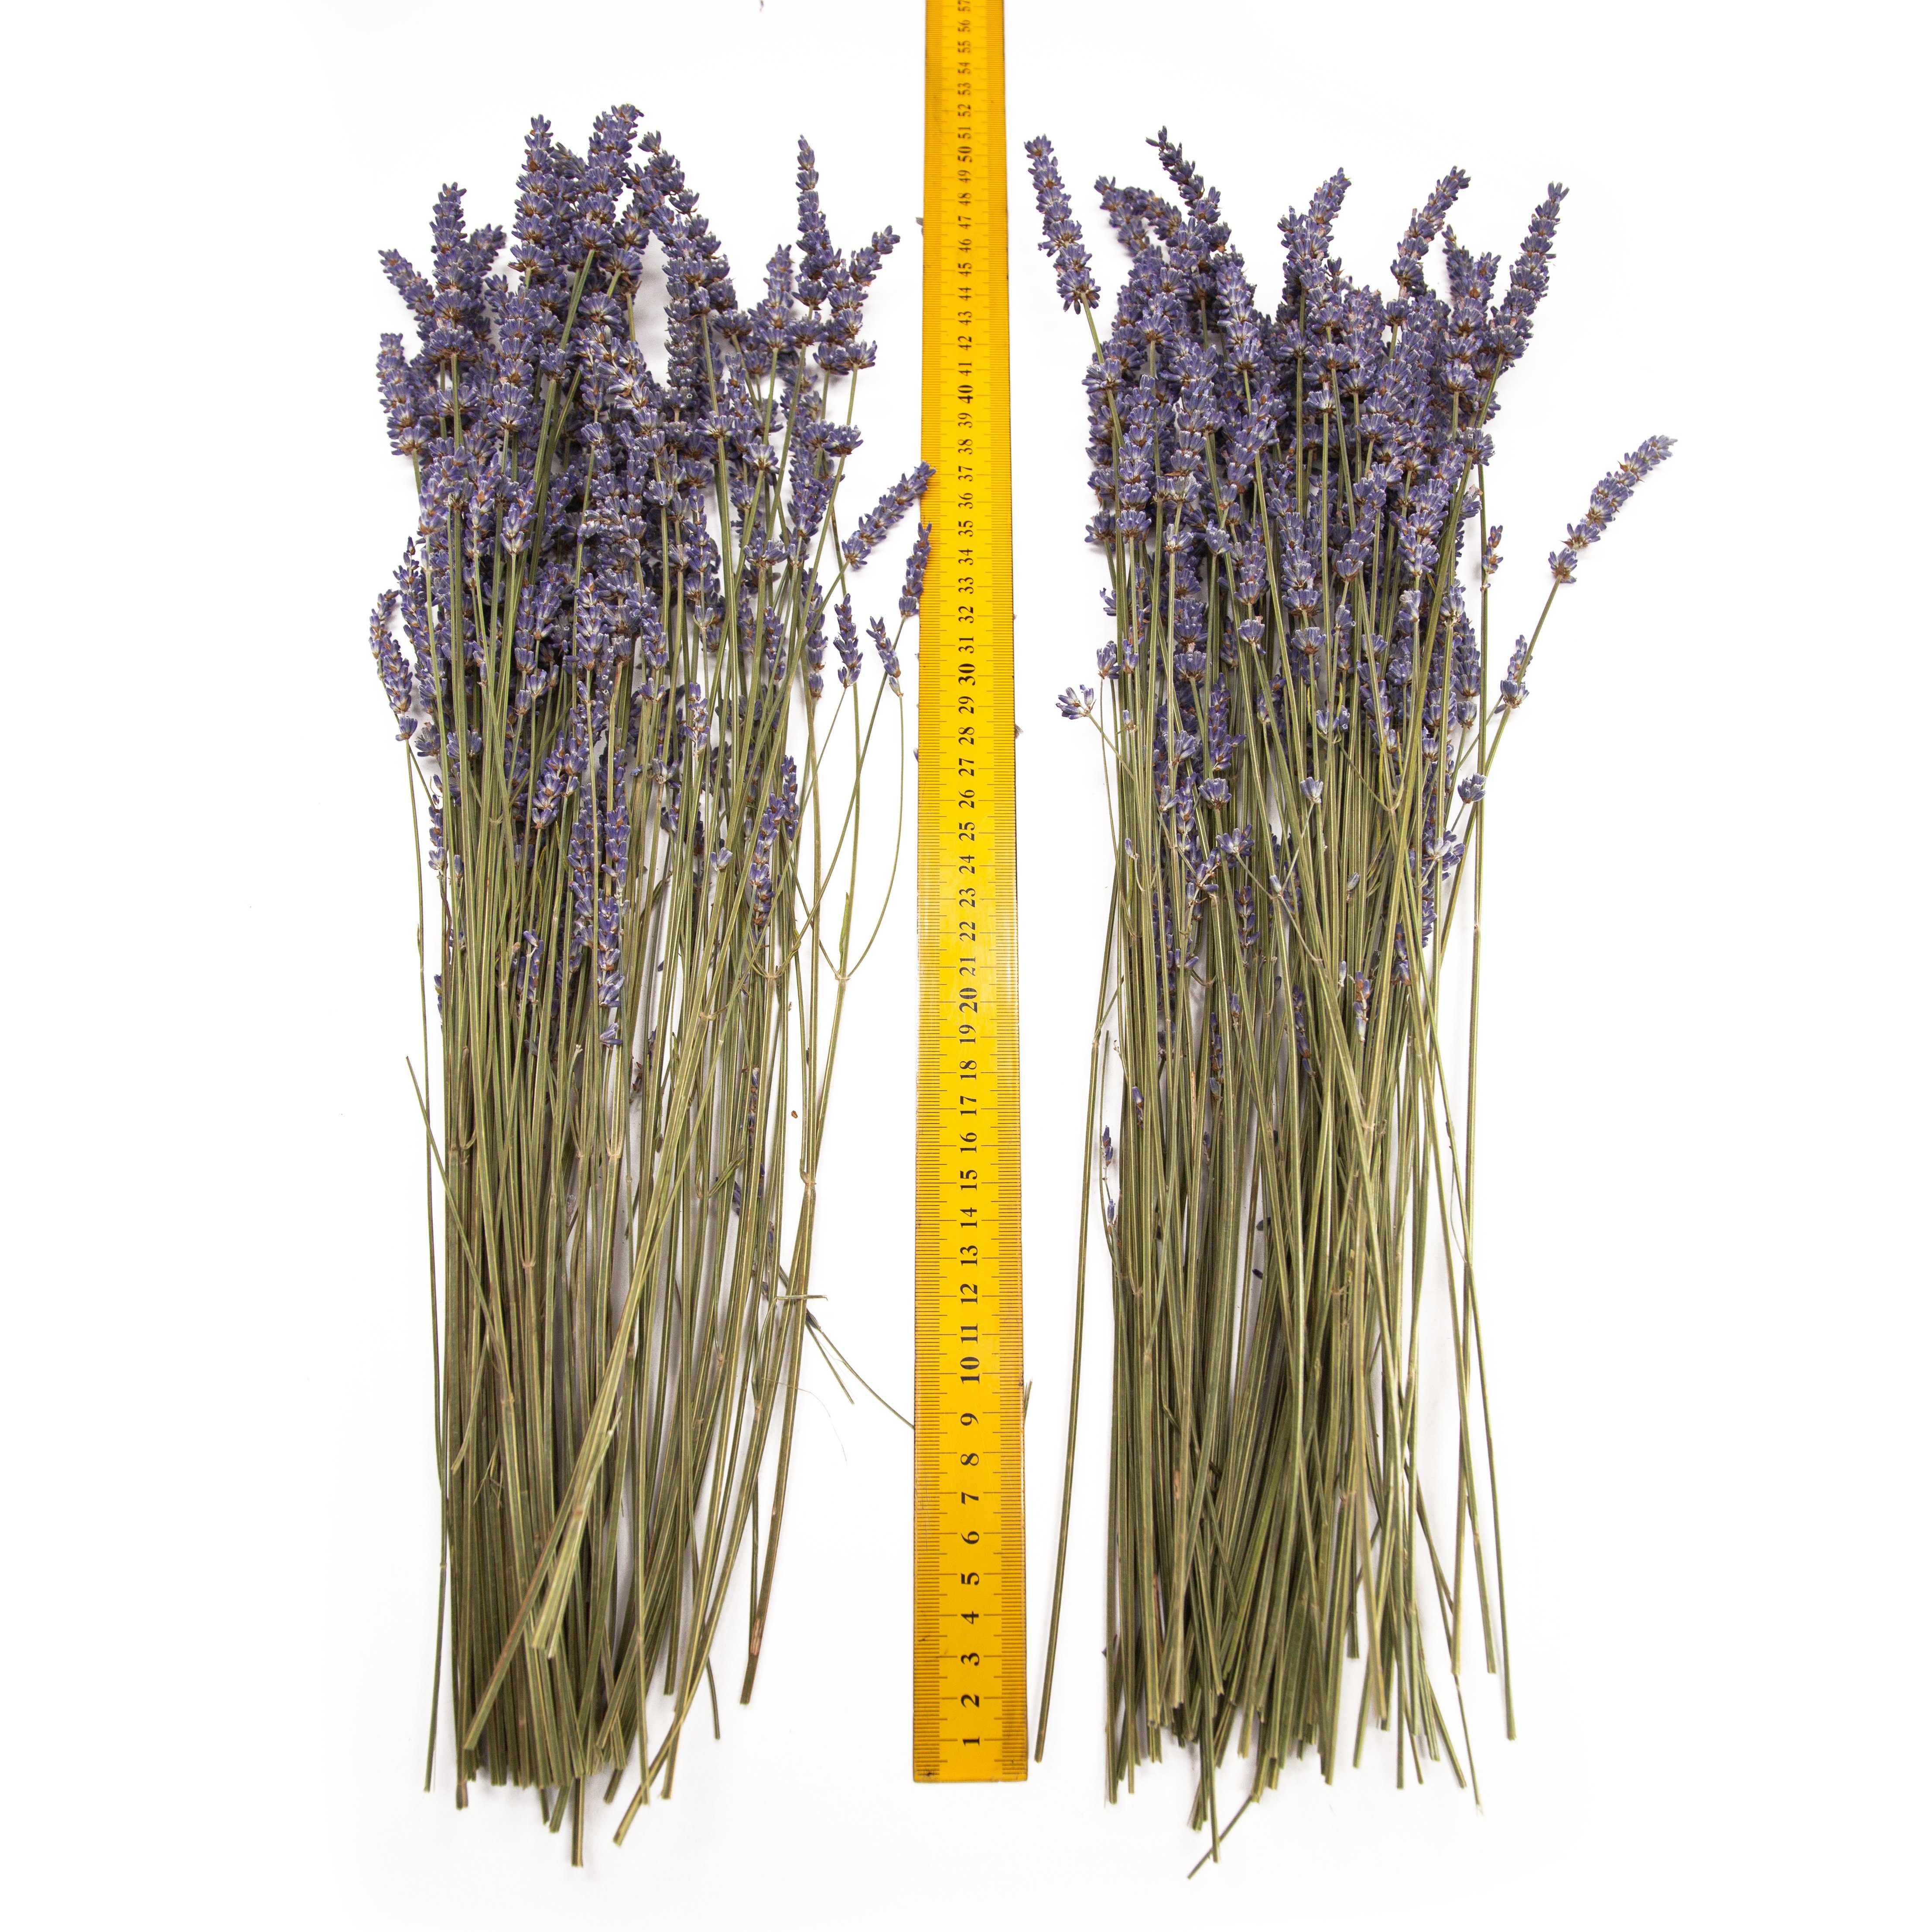 Lavendel Bund Blüten getrocknet Lavendelstrauß ca 300 Stengel ca 30-40 cm lang 